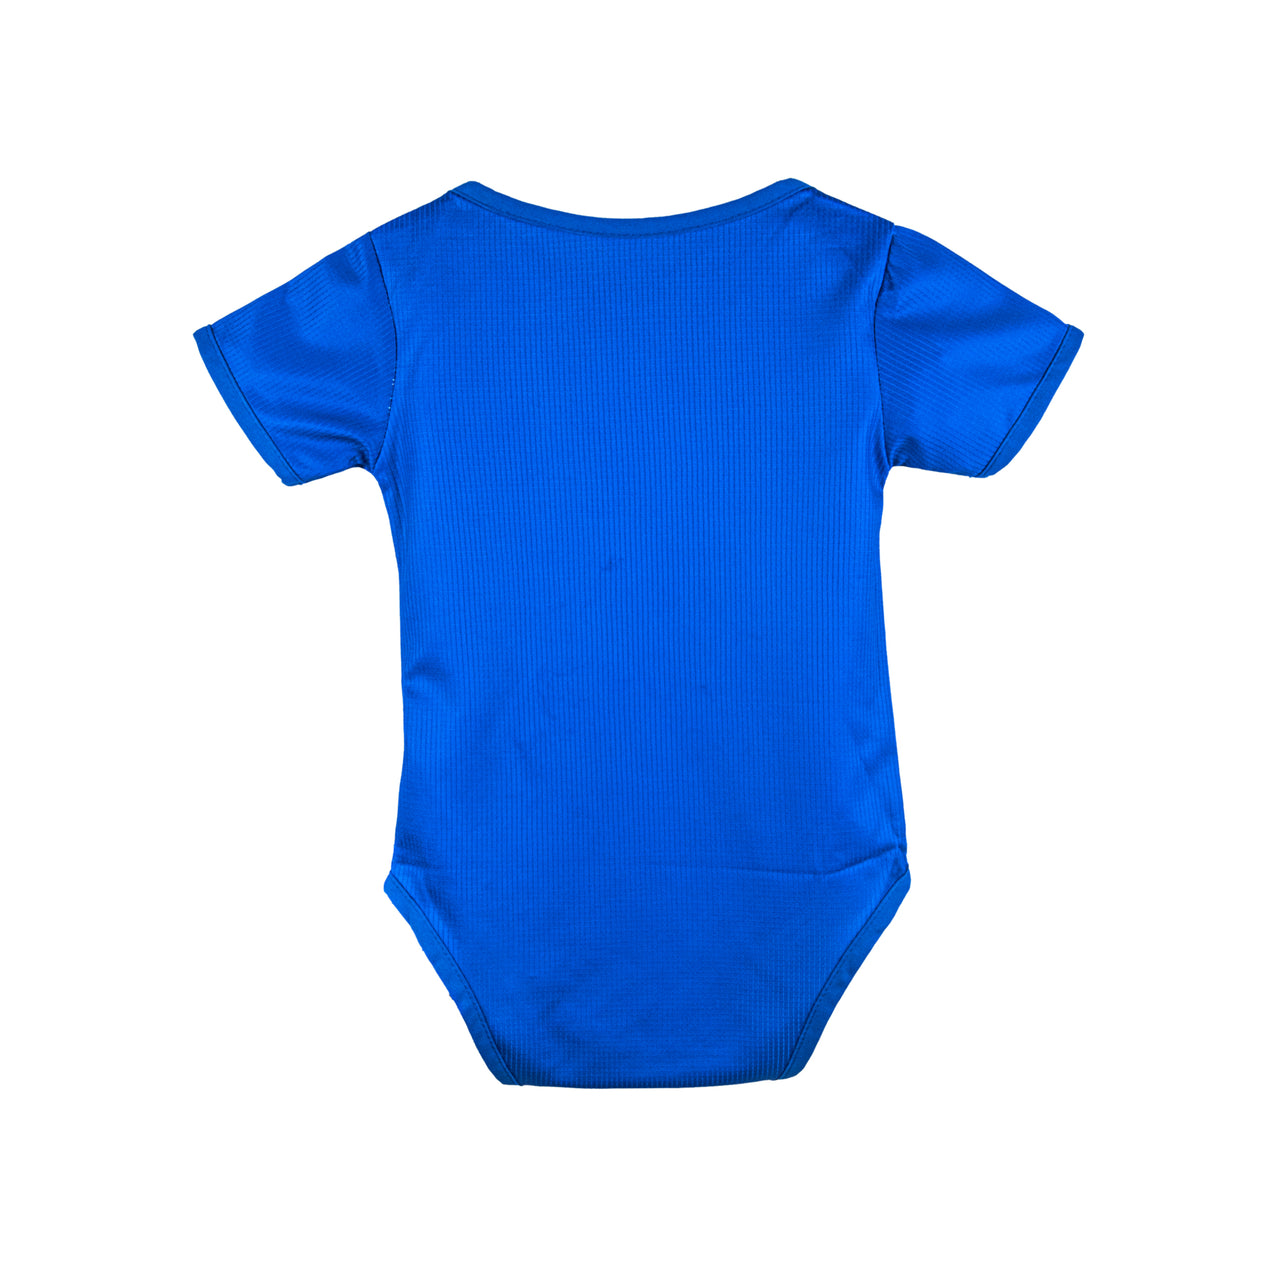 Chelsea F.C limited design infant bodysuit - Mitani Store